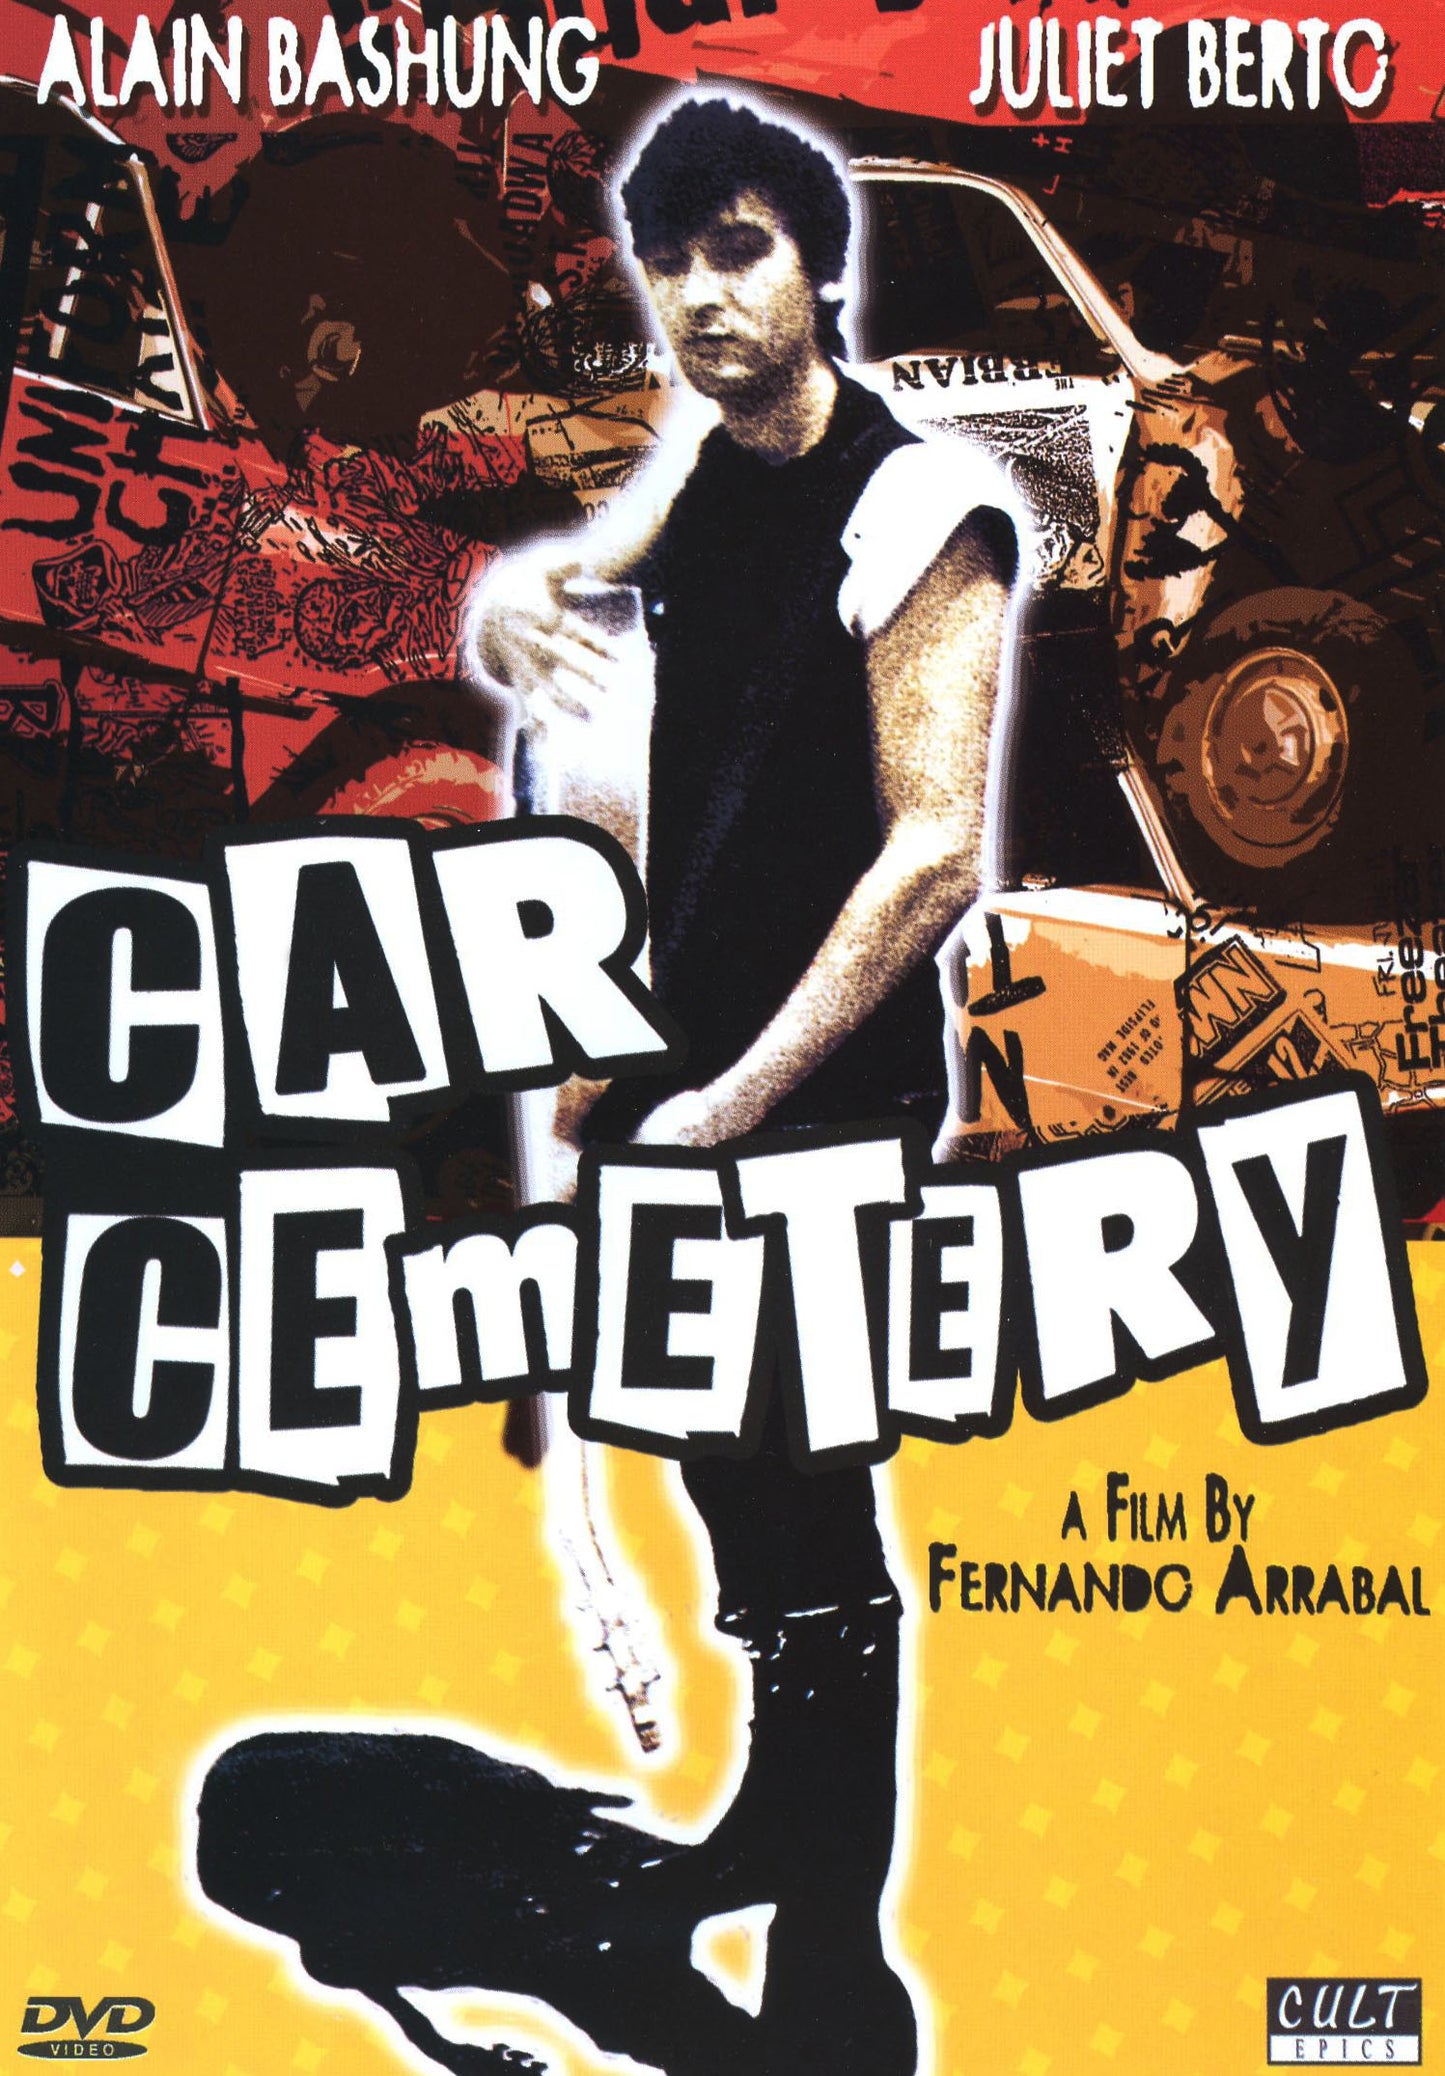 Car Cemetery cover art